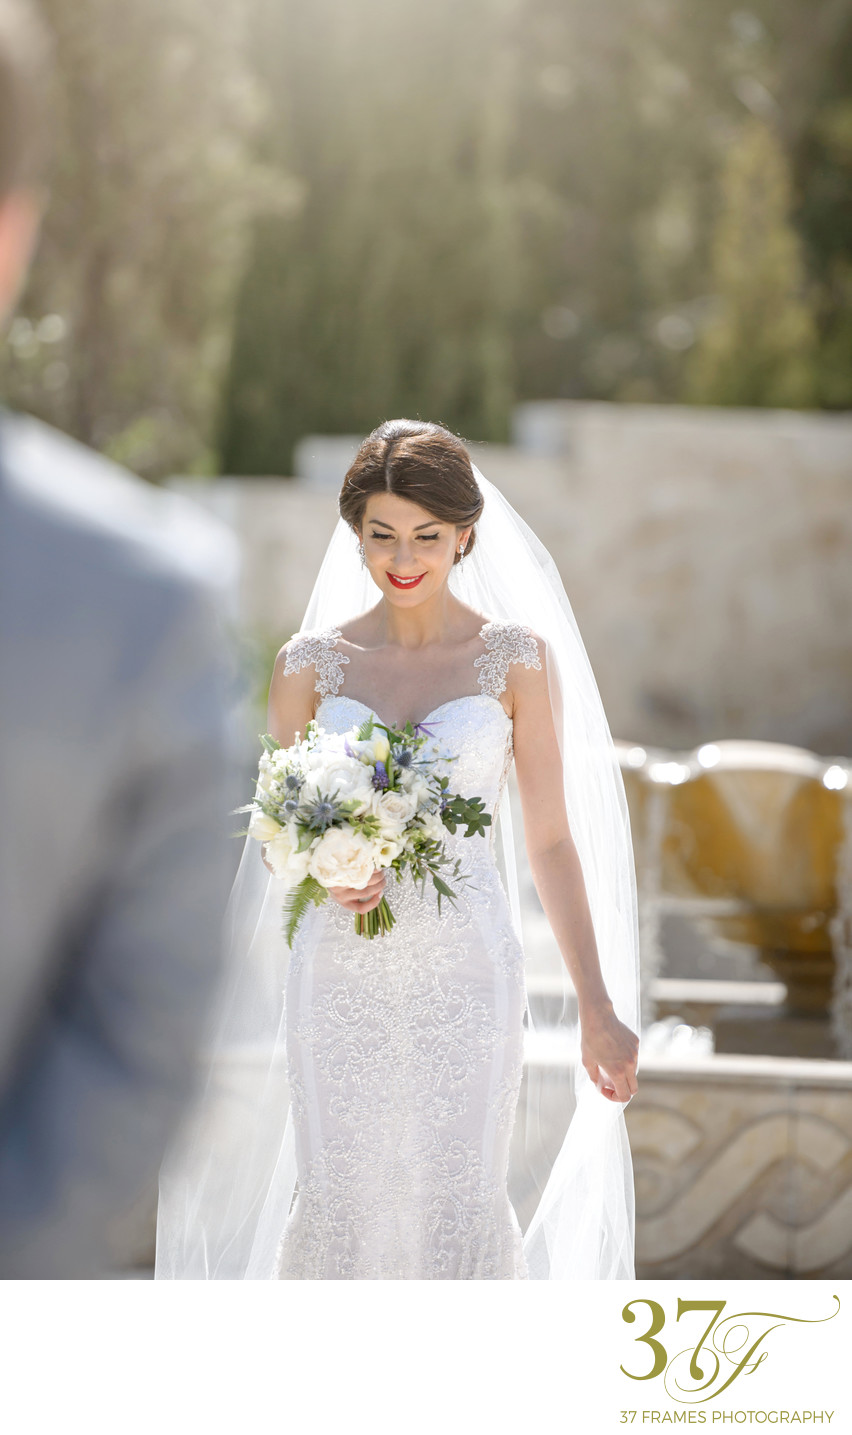 First Look | Destination Wedding Photography Cyprus